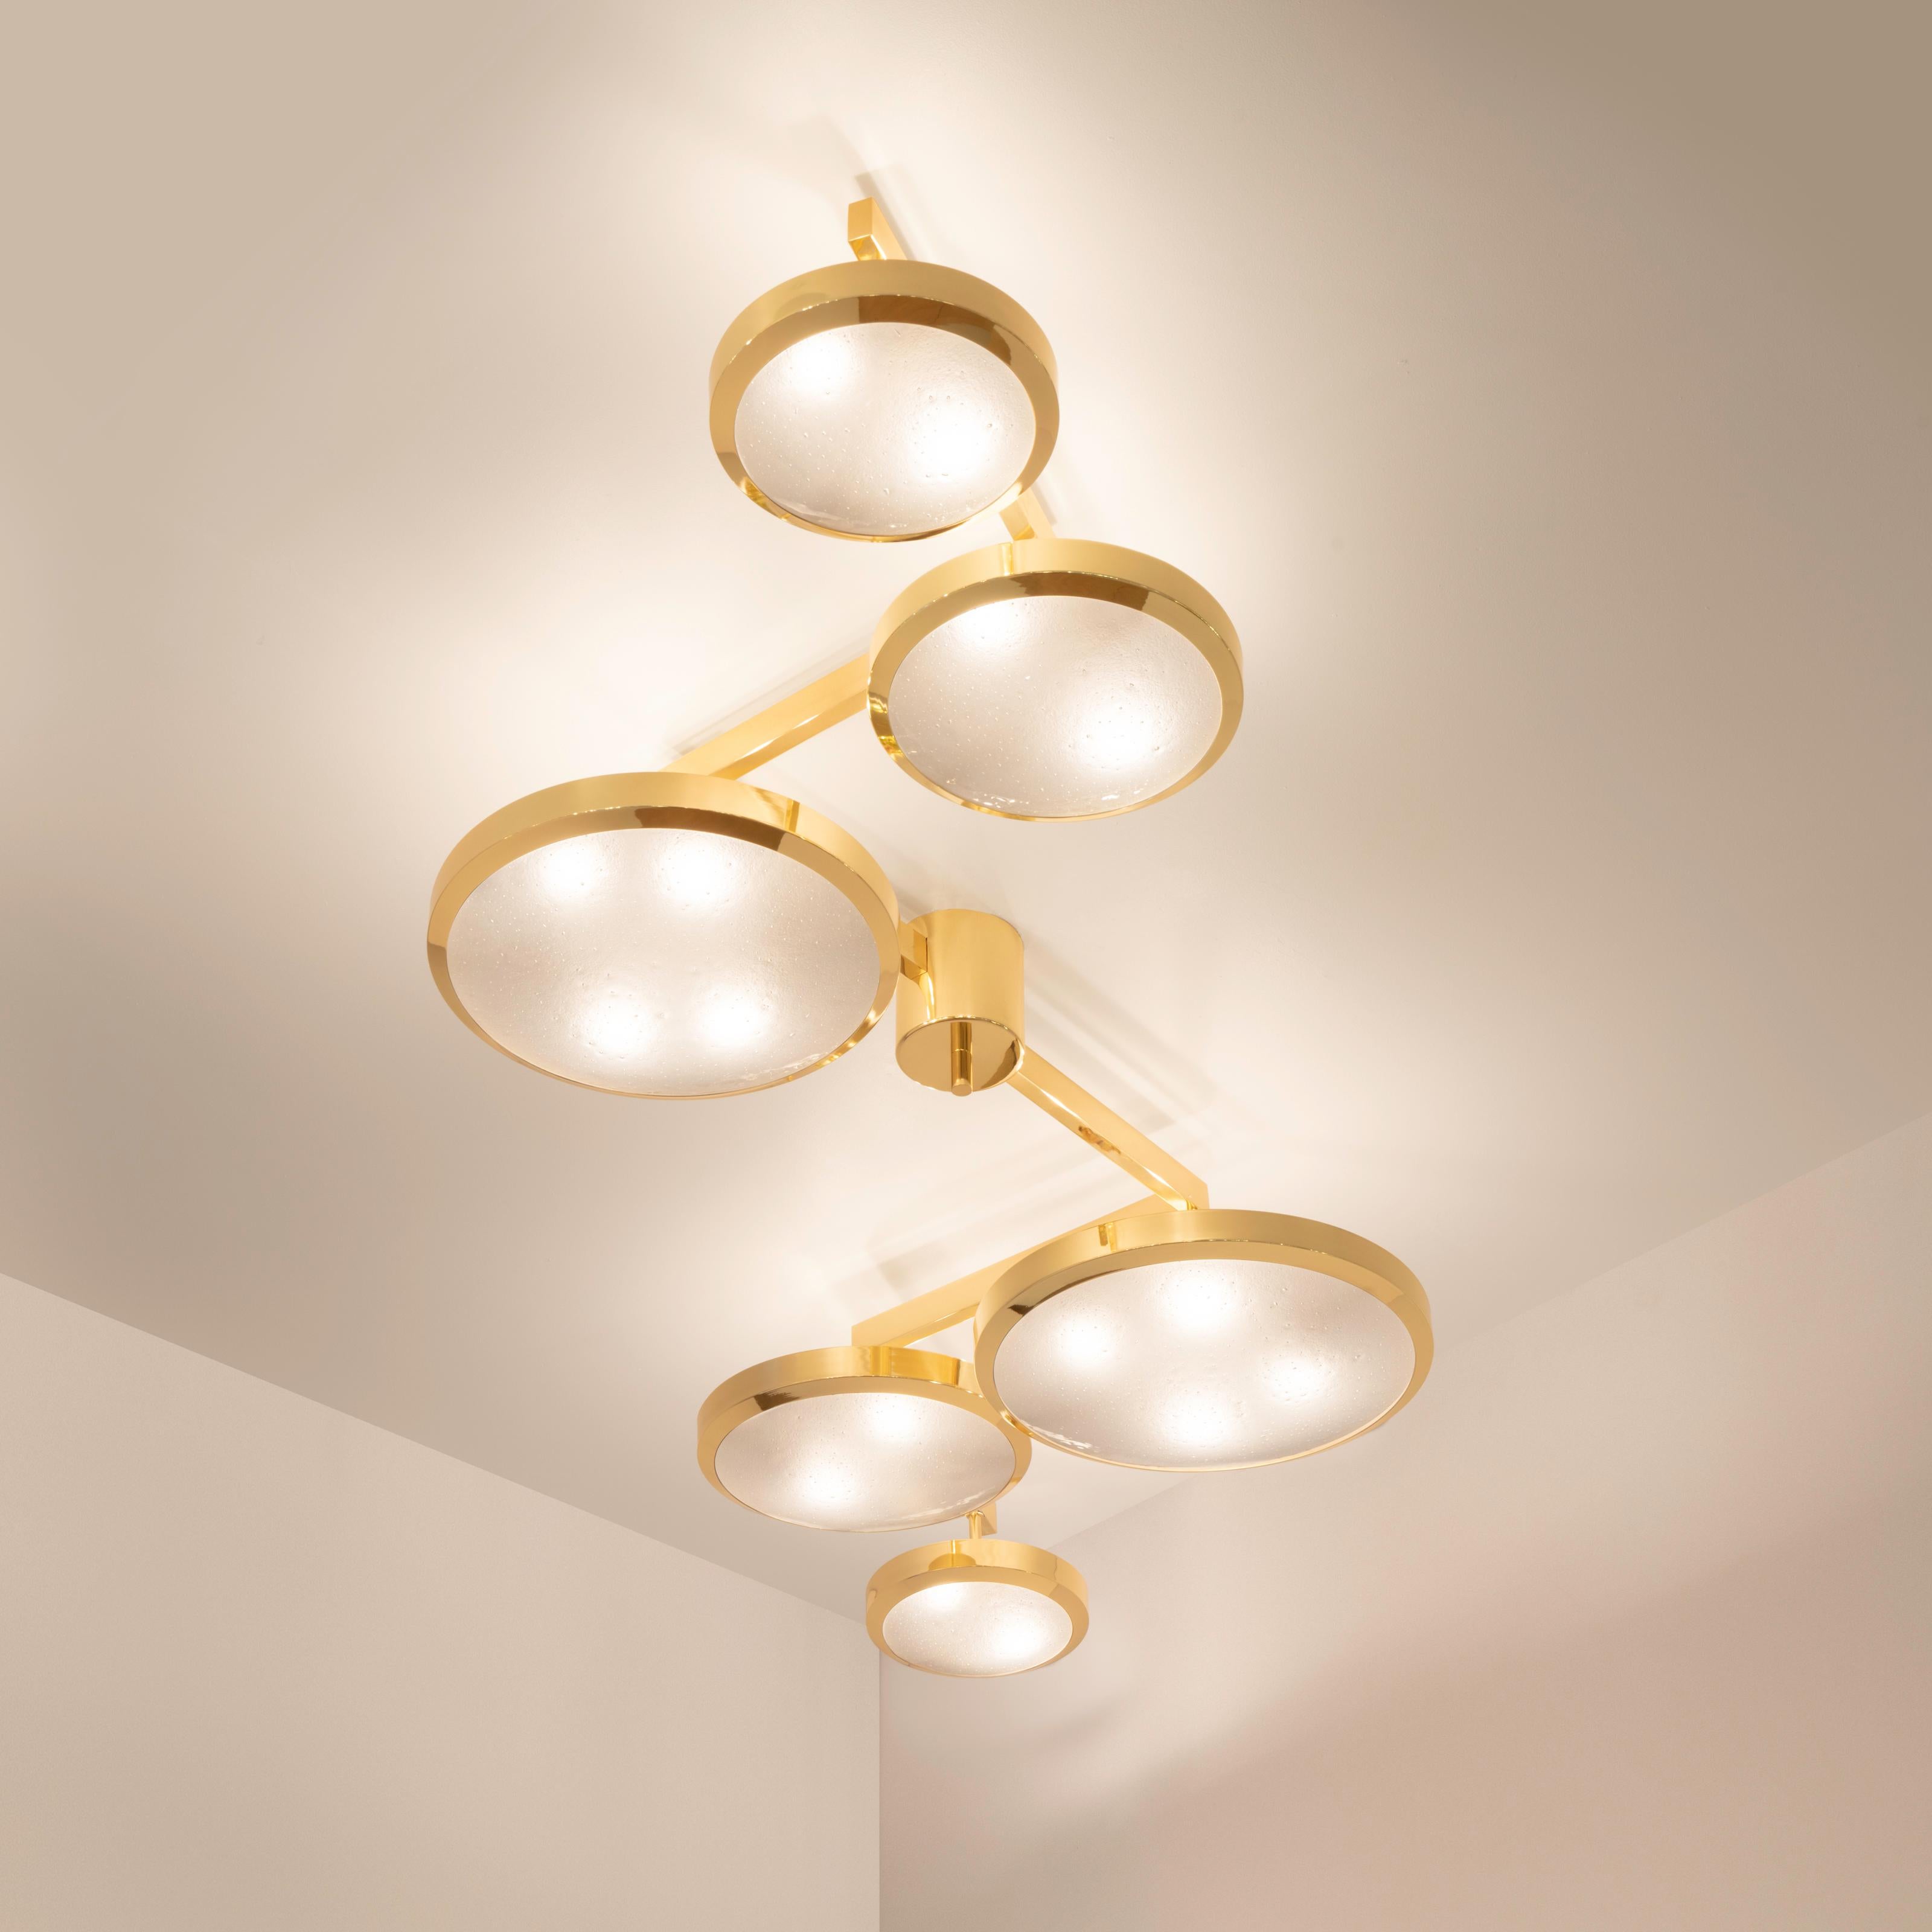 Italian Geometria Sospesa Ceiling Light by Gaspare Asaro-Polished Nickel Finish For Sale